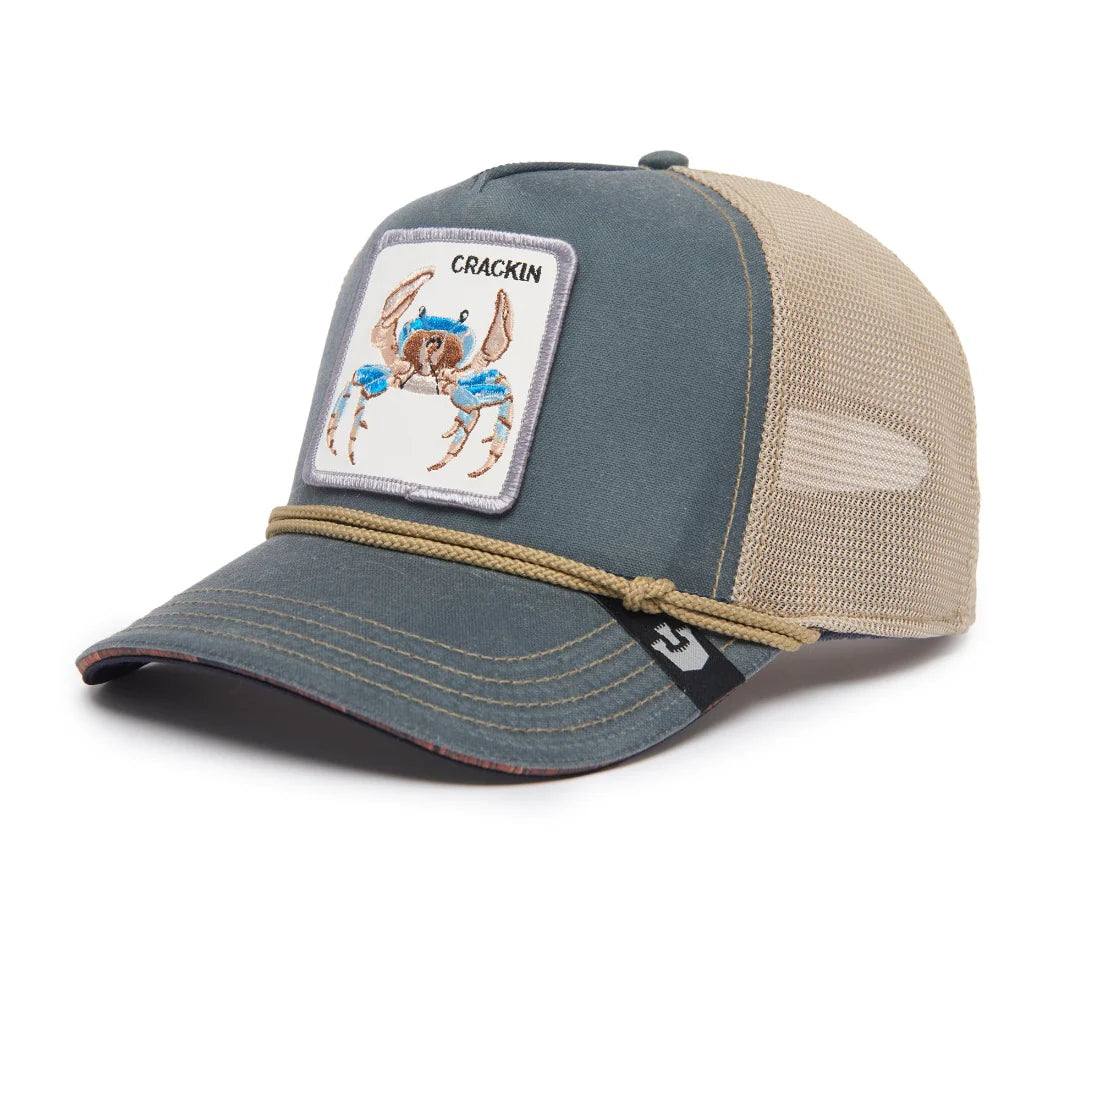 'Goorin Bros. Wuz Cracken Trucker Hat' in 'Slate' colour